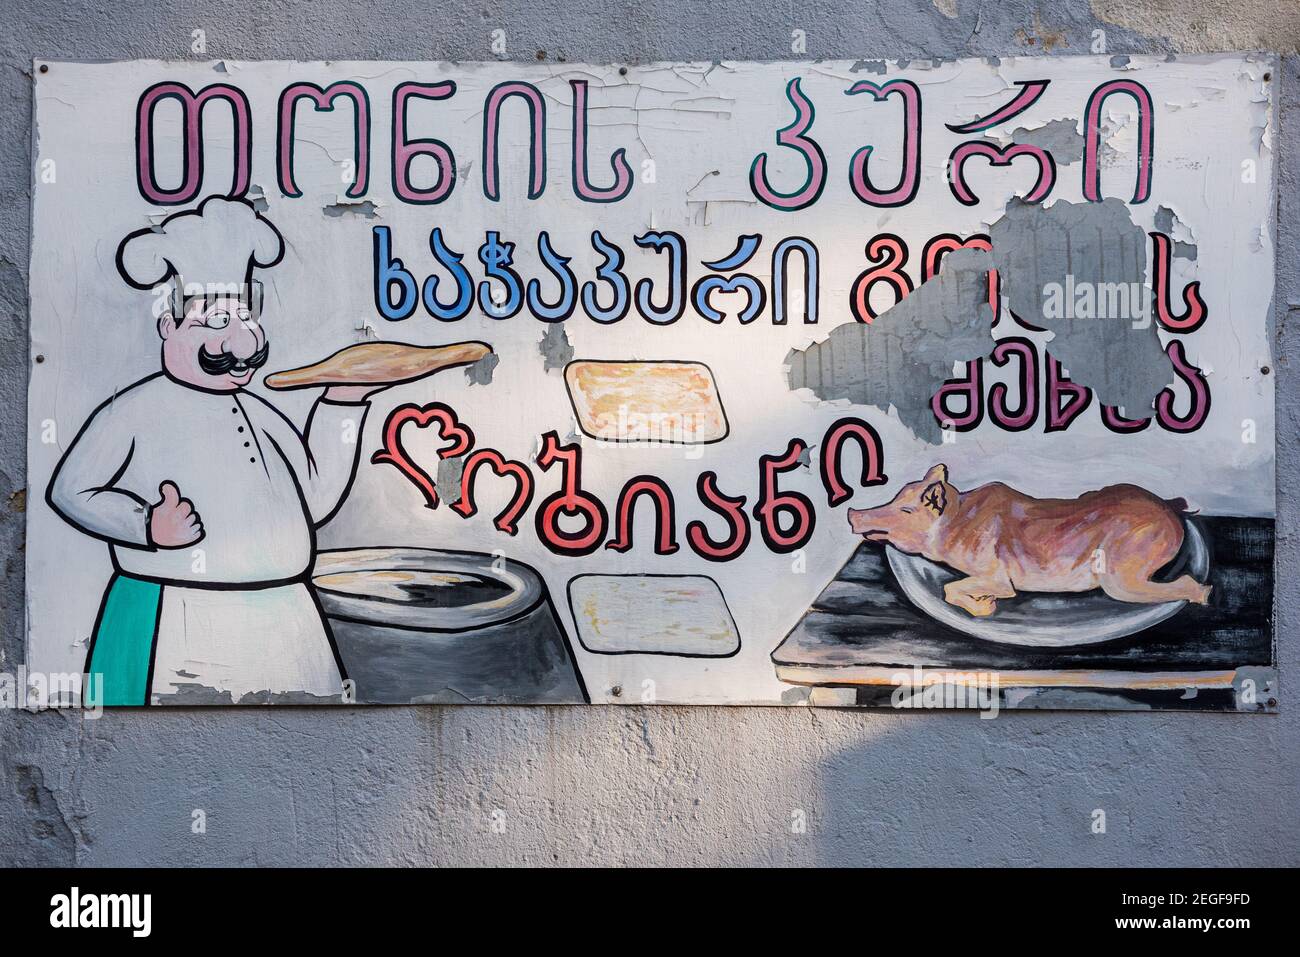 Kutaisi, Georgia - May 25, 2016: a bakery's wall sign saying: 'tonis-puri, khachapuri, lobiani, roasting of piglets'. Stock Photo